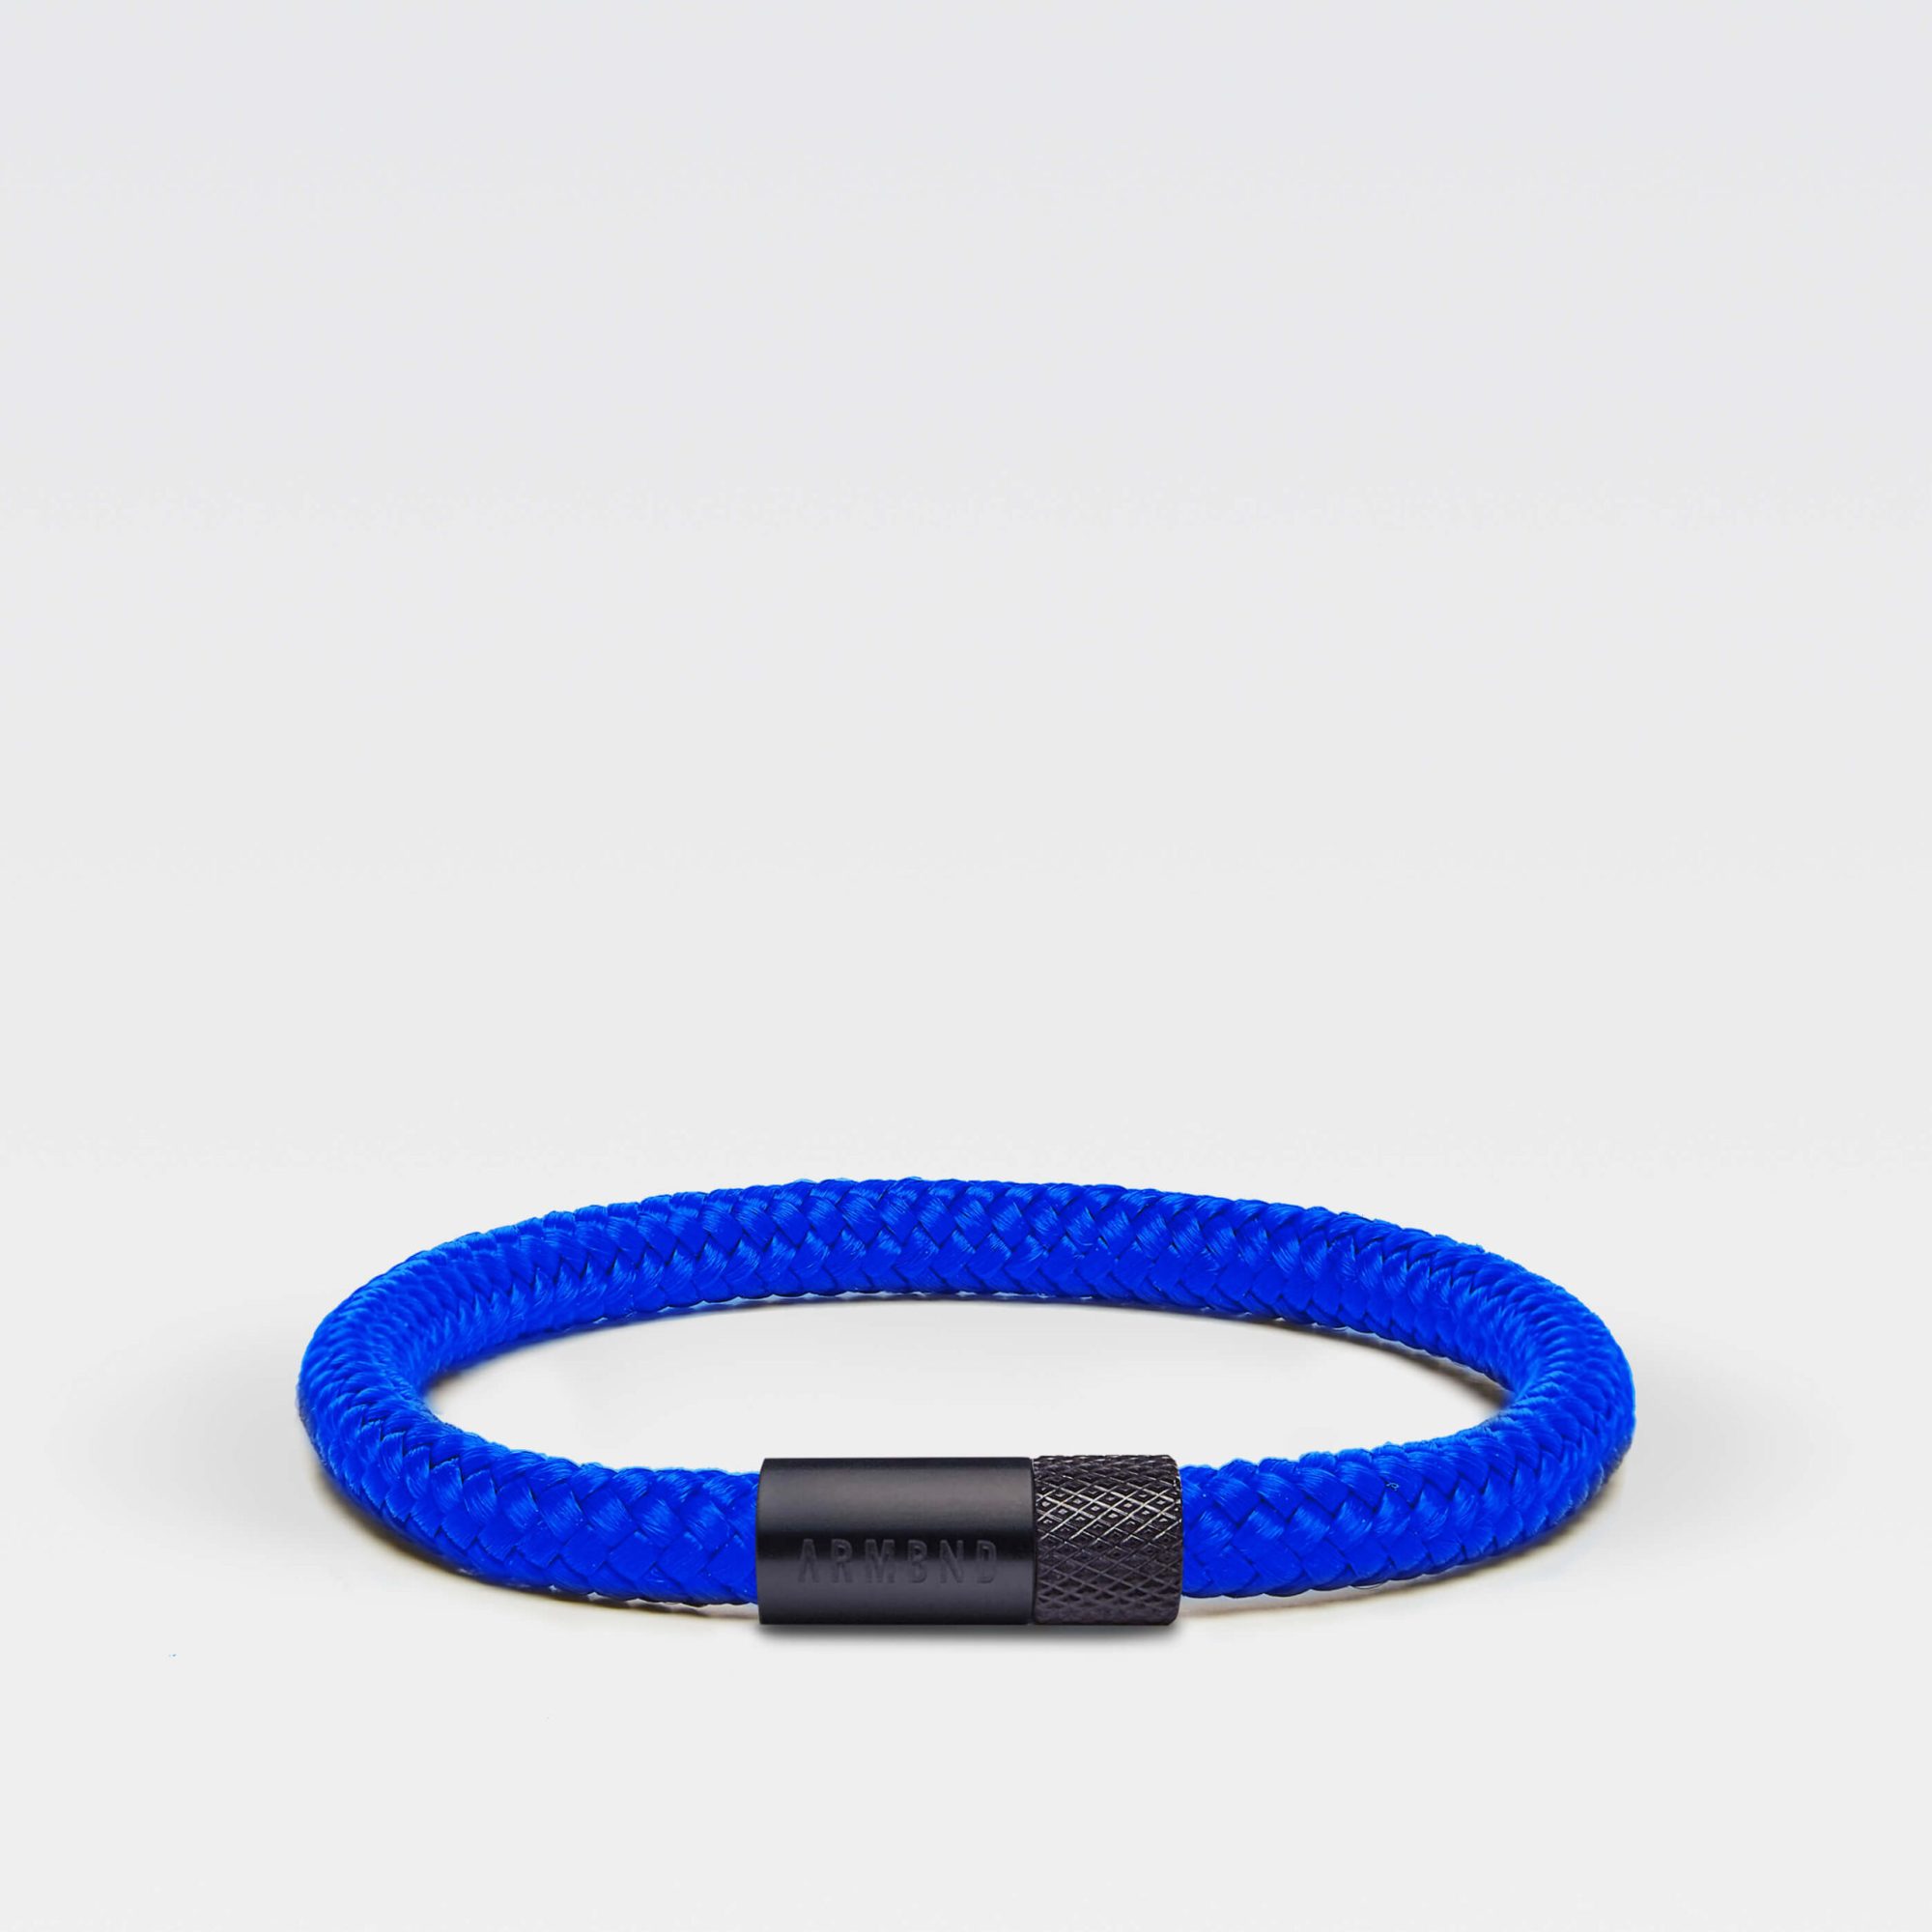 Kobalt blauwe dunne armband met zwarte stalen sluiting